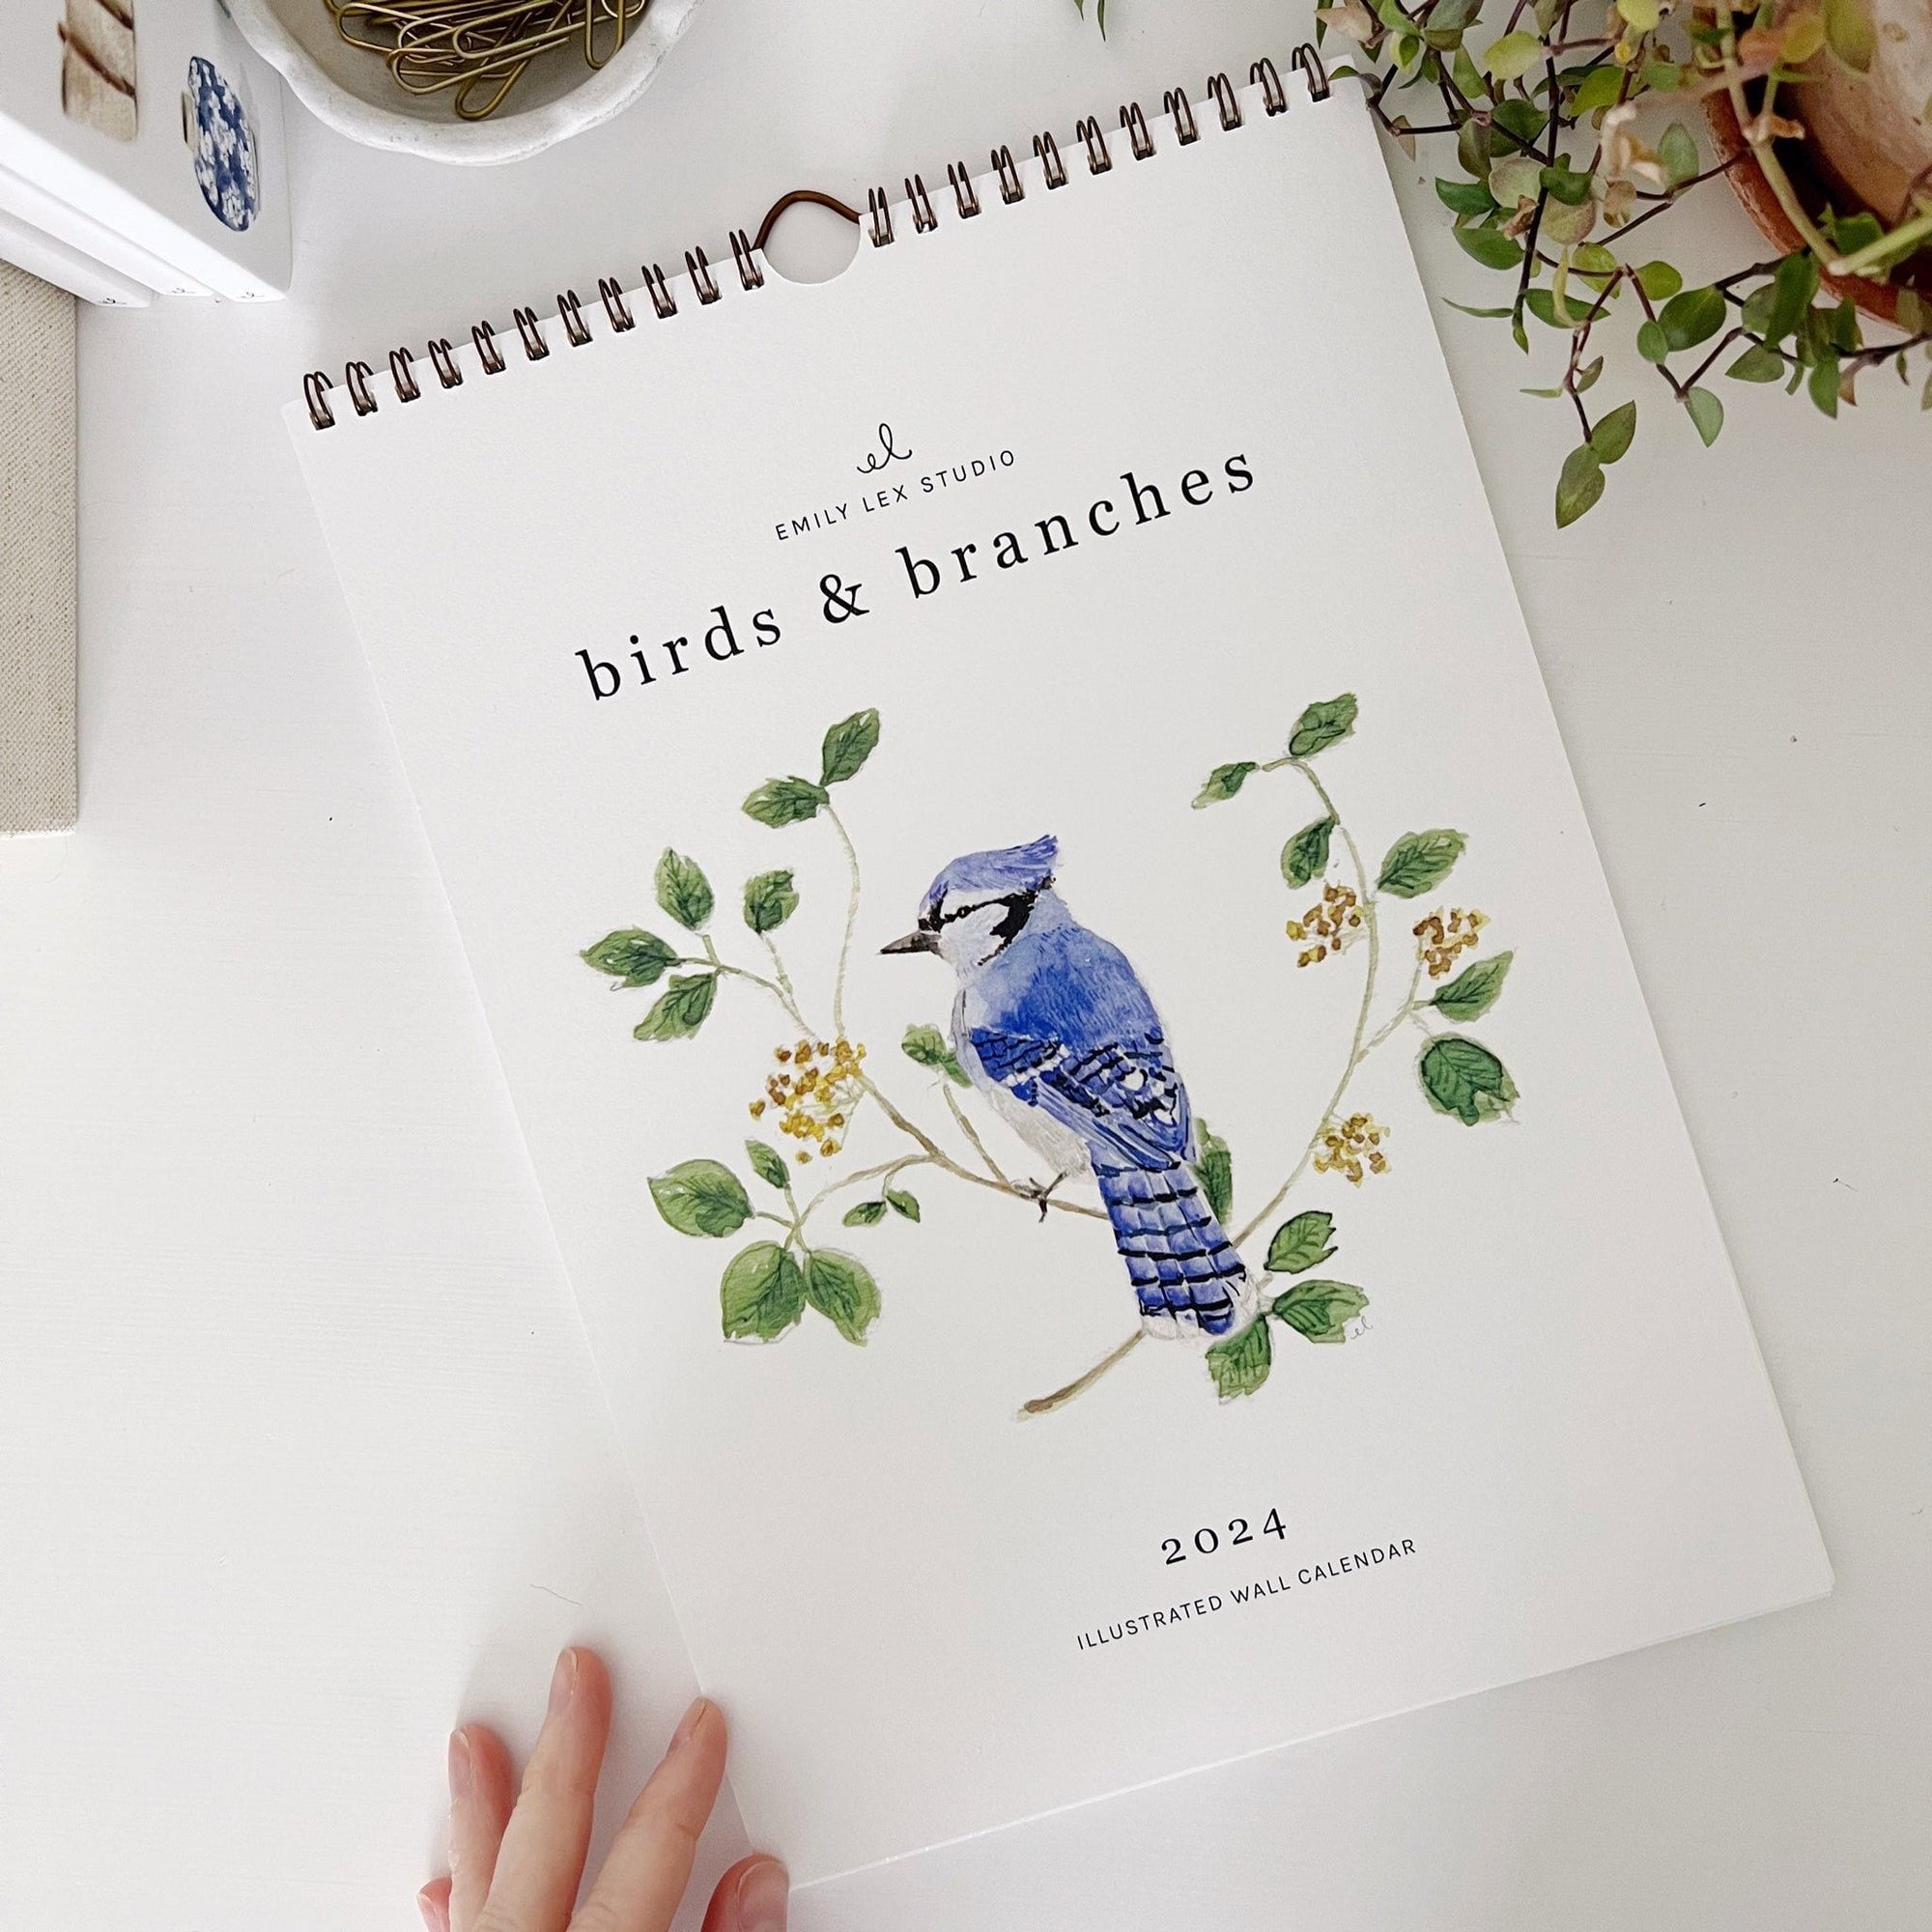 2024 birds & branches wall calendar - emily lex studio